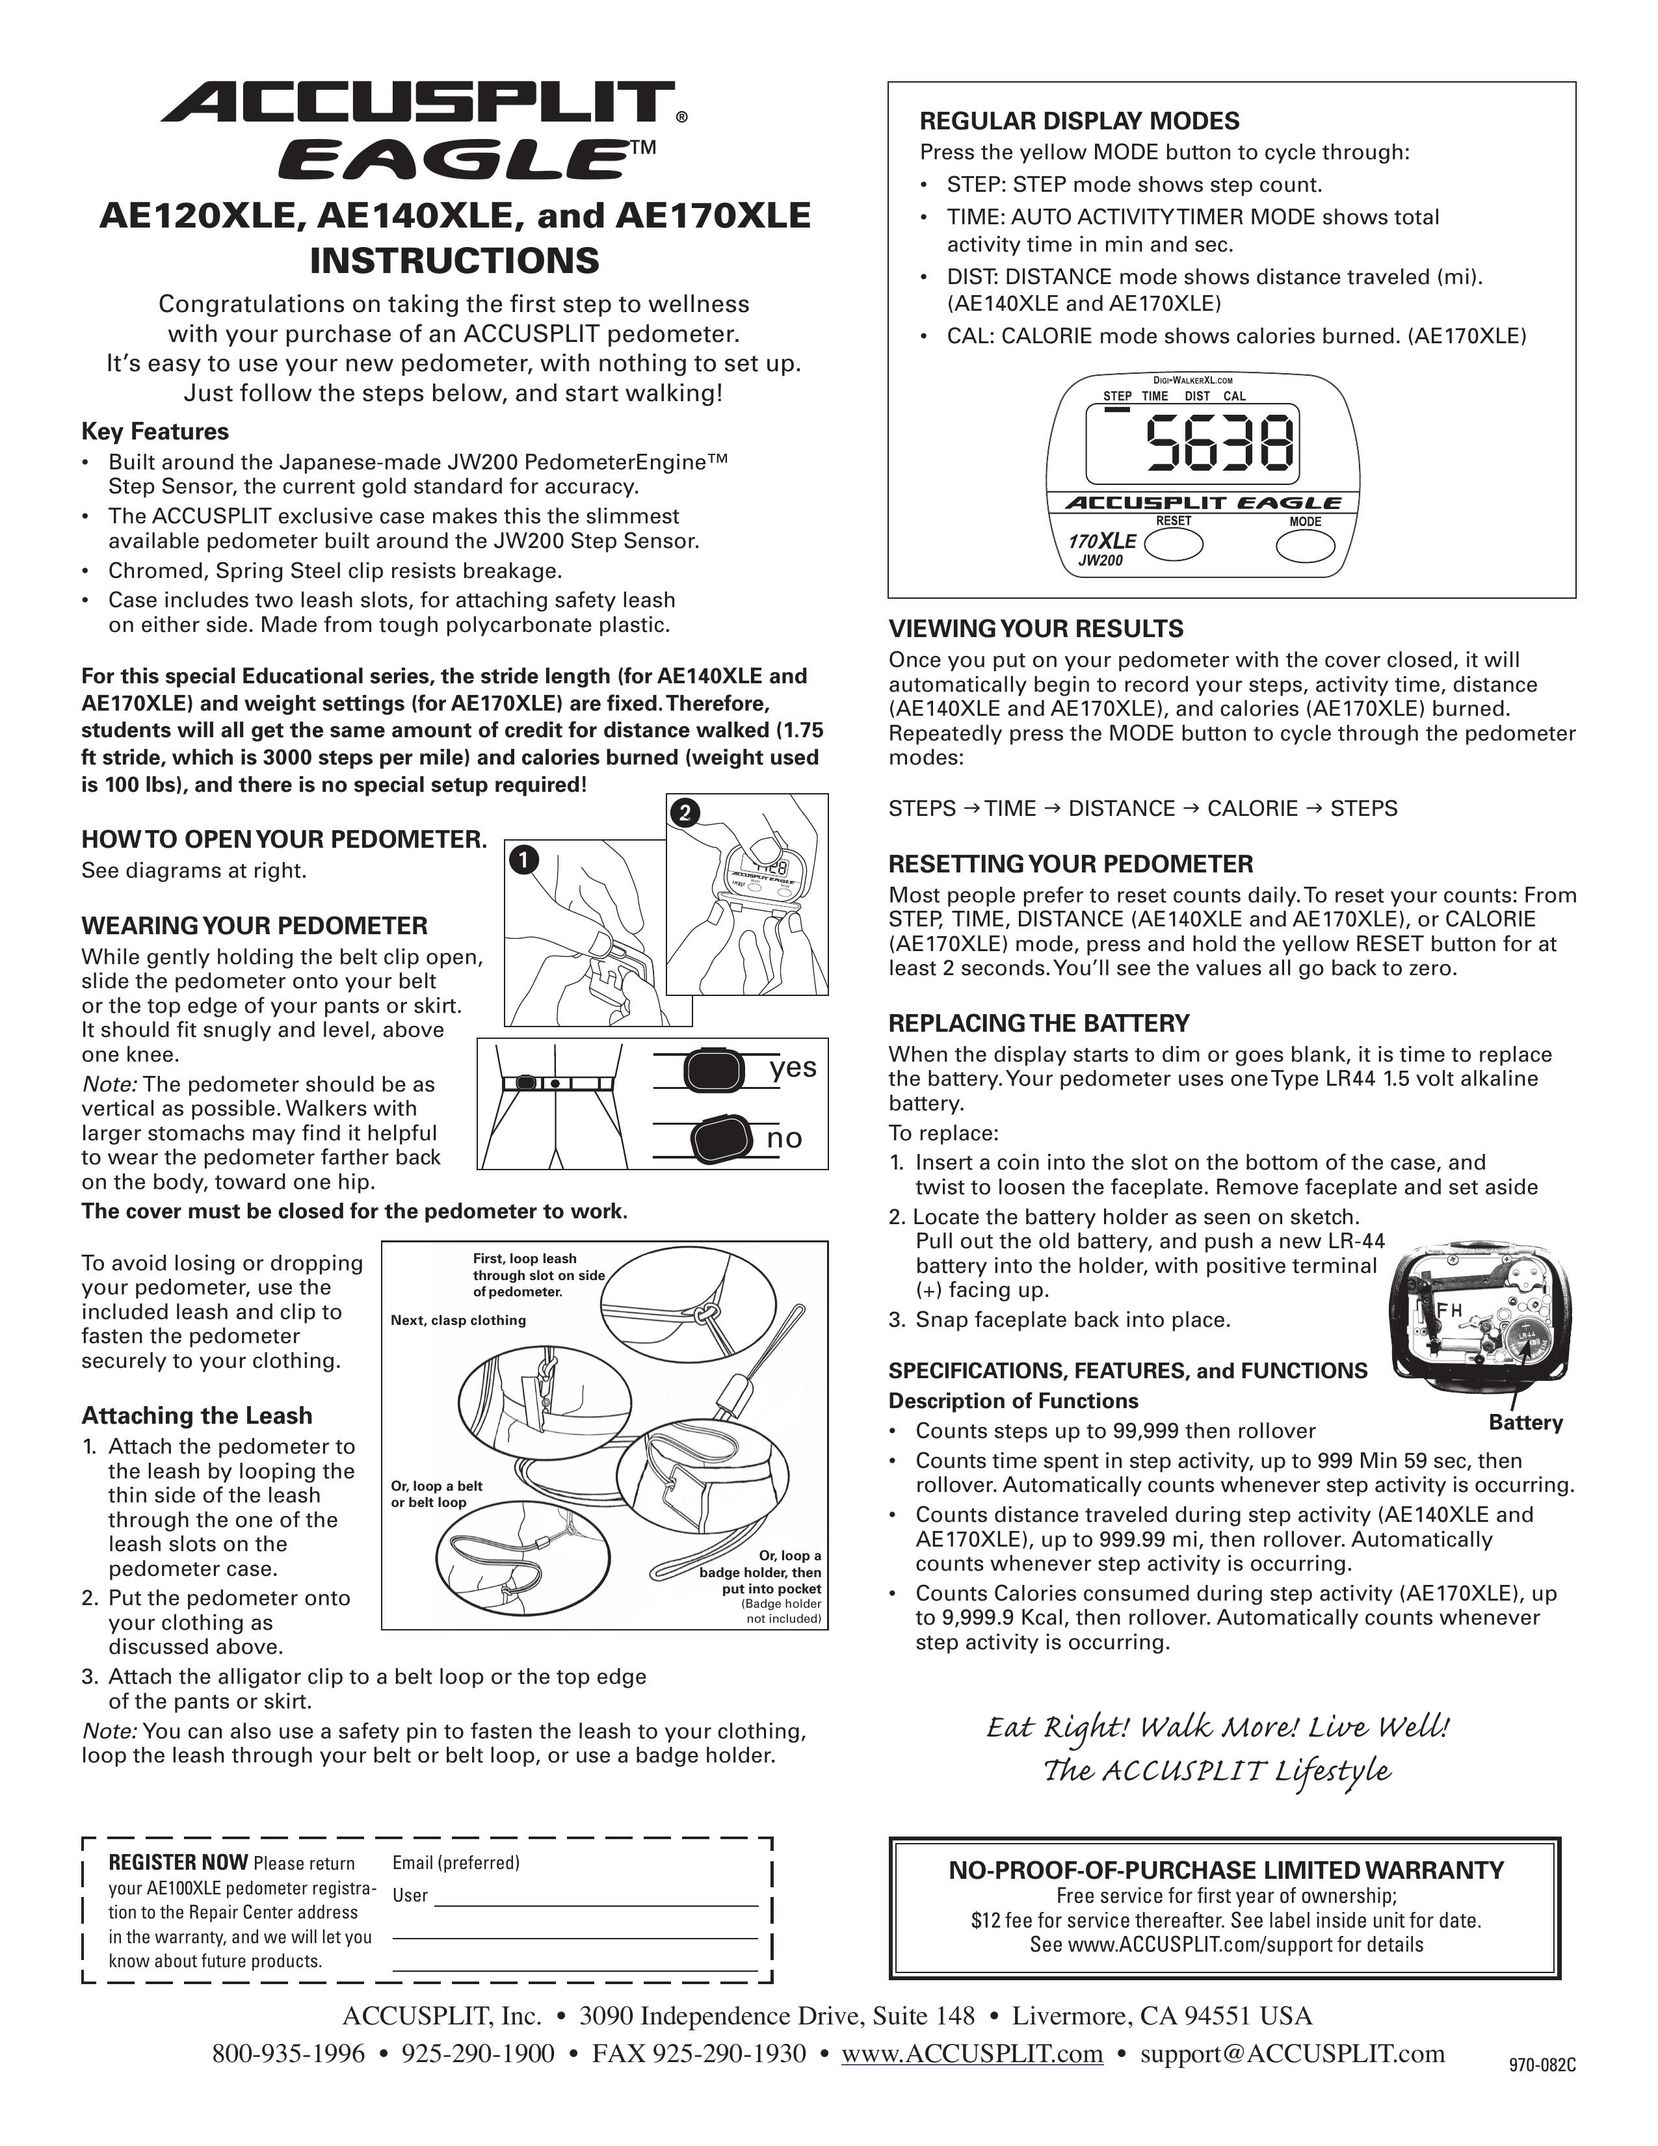 Accusplit AE170XLE Fitness Electronics User Manual